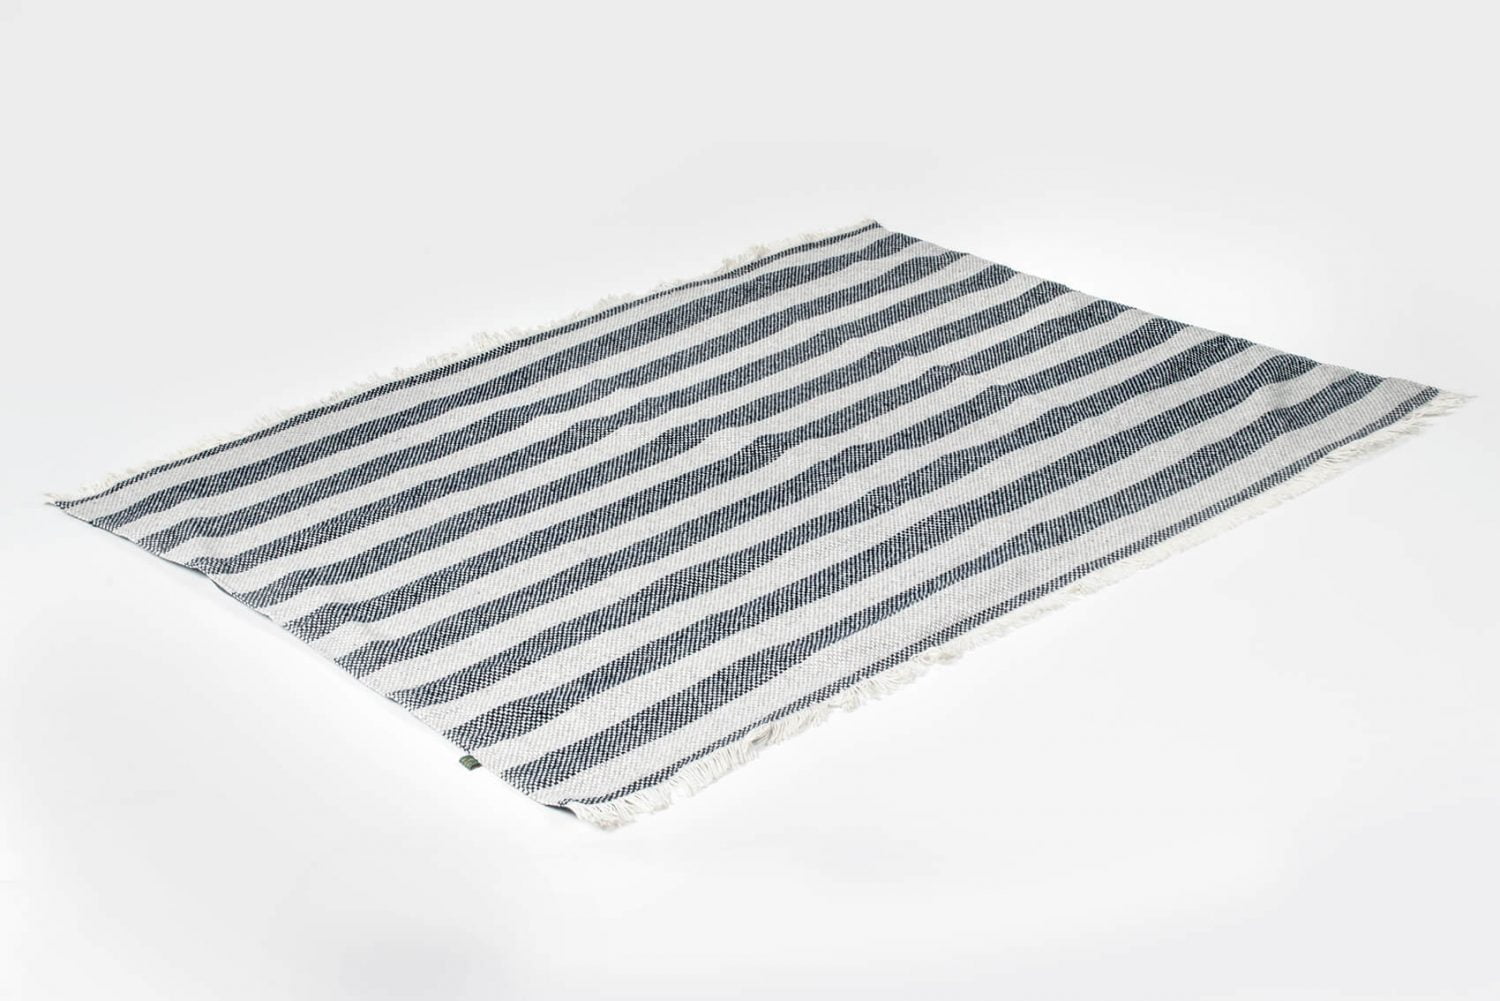 Tweedmill-Picknickkleed wol-Banen-Zwart-Grijs-waterdicht